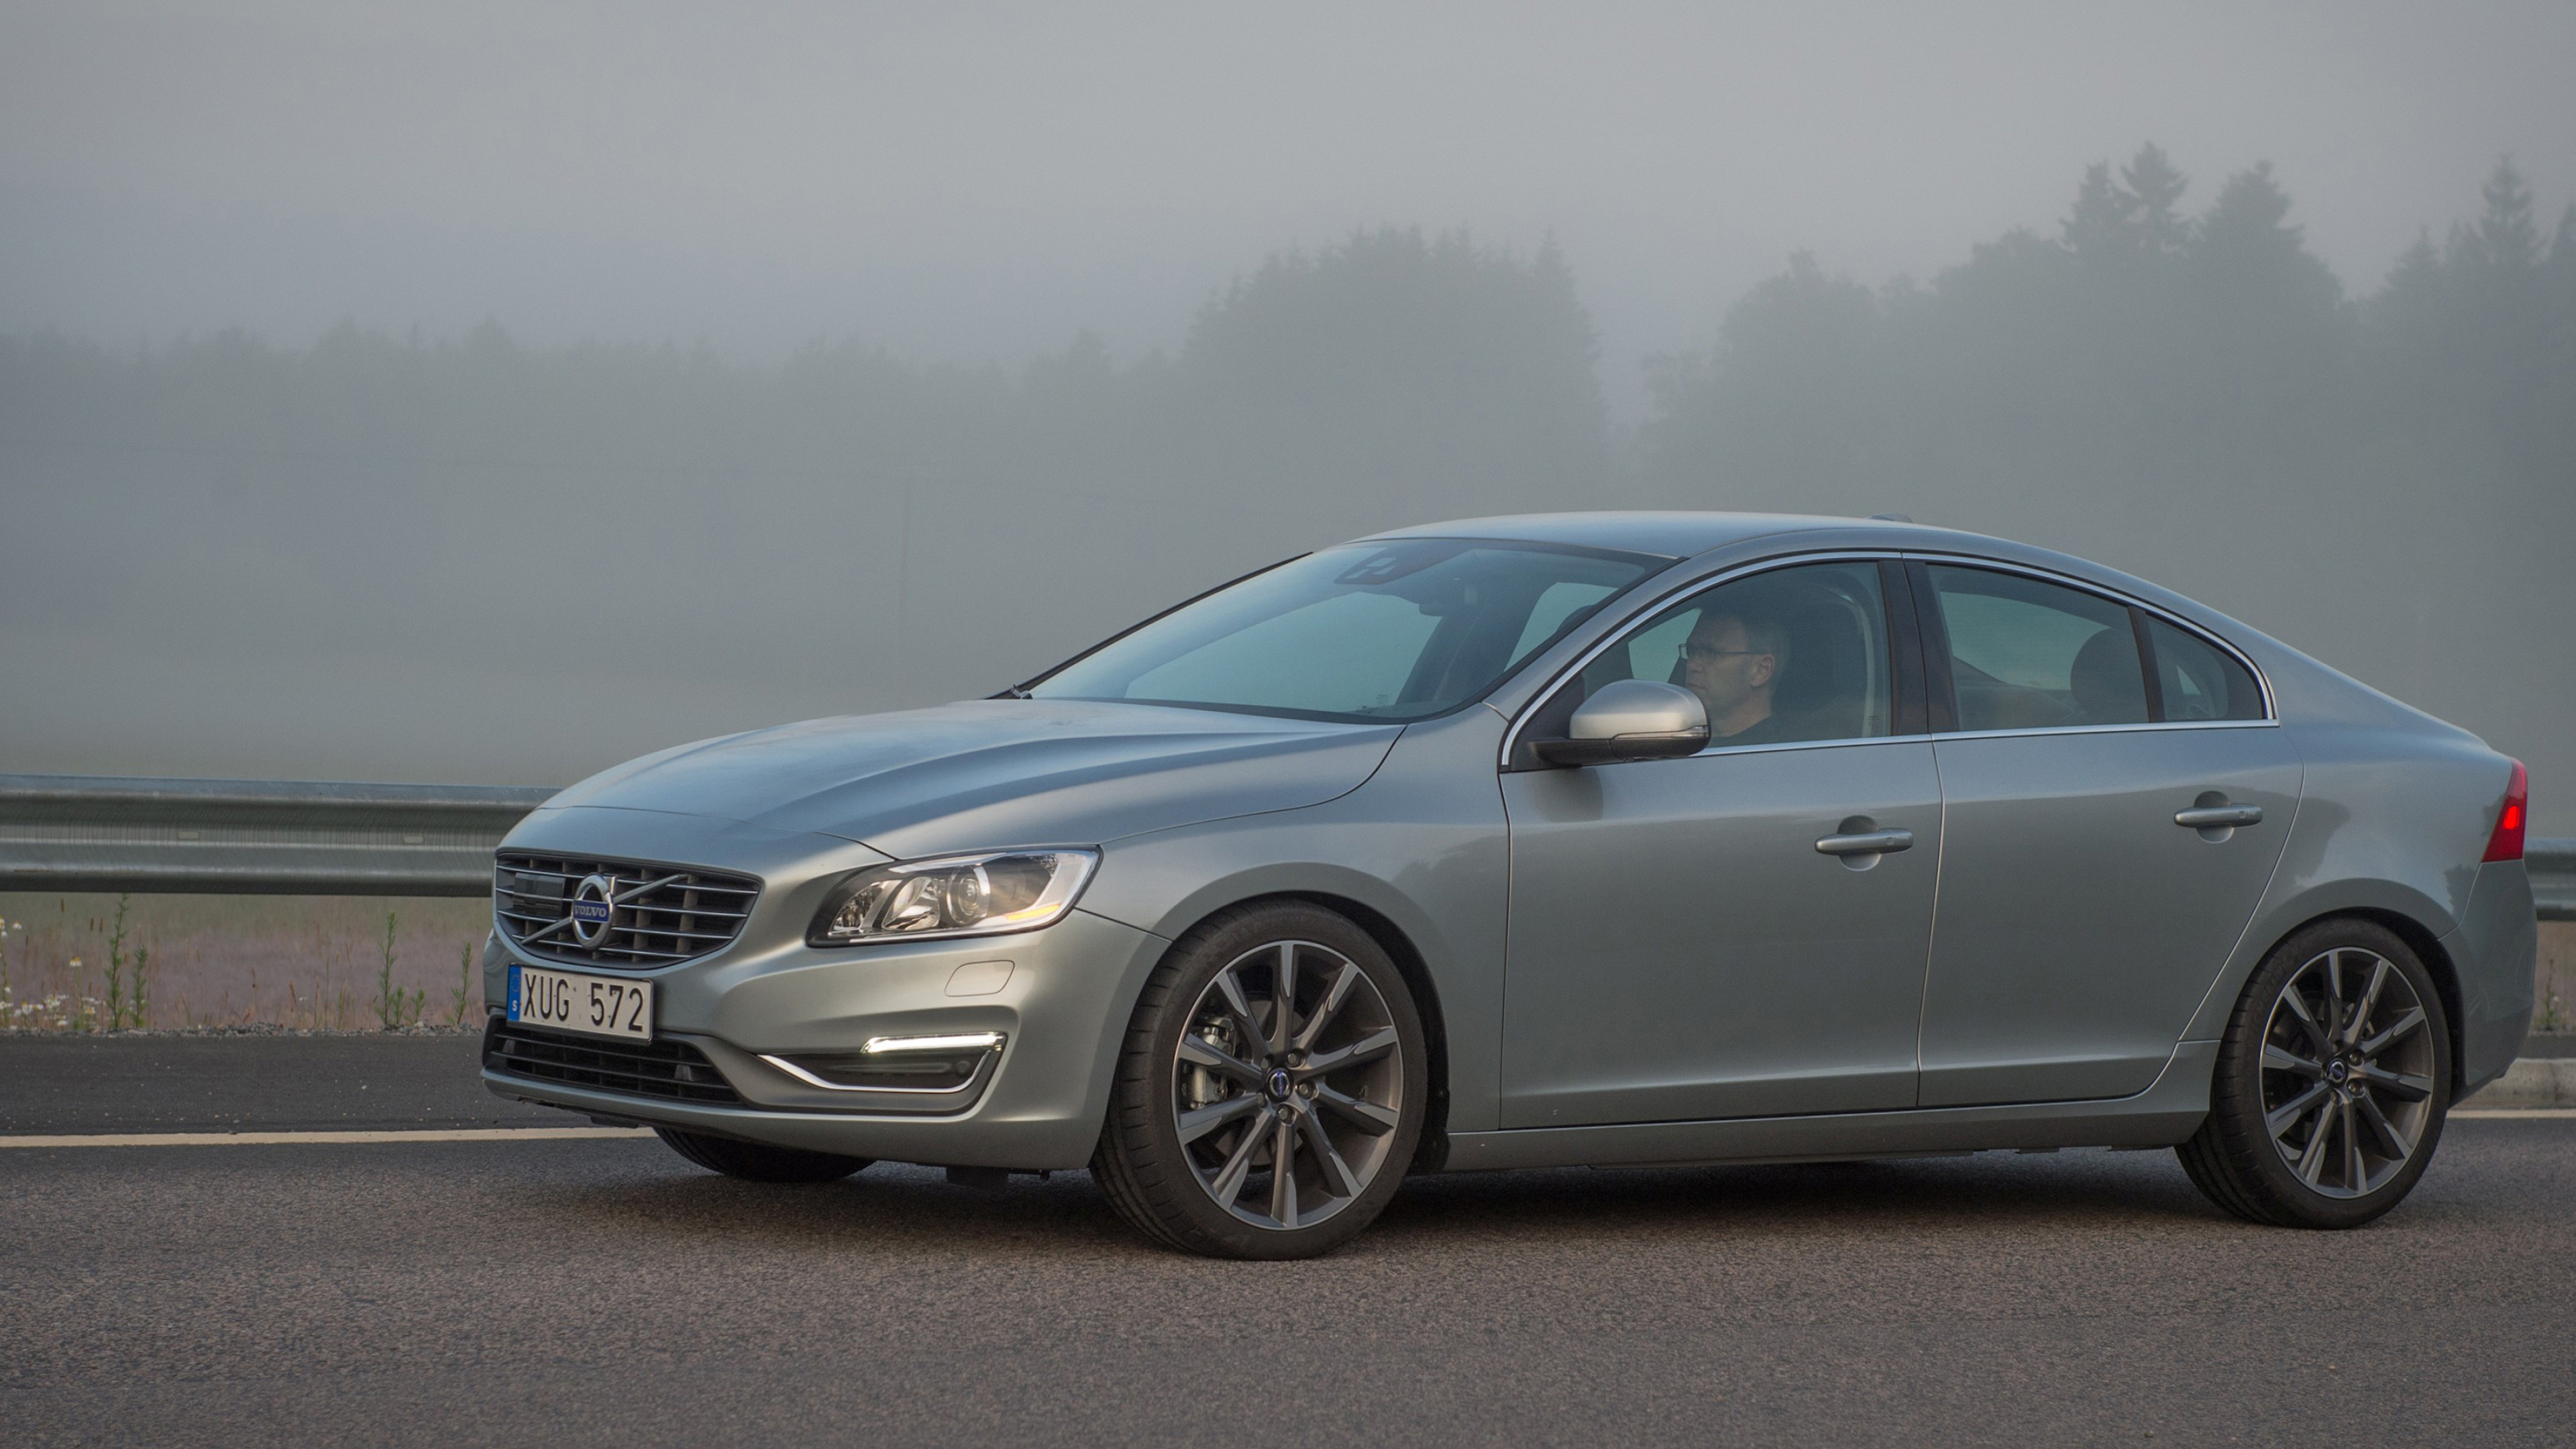 Volvo S60, Cars desktop wallpapers, High-definition images, Luxury vehicle, 3840x2160 4K Desktop